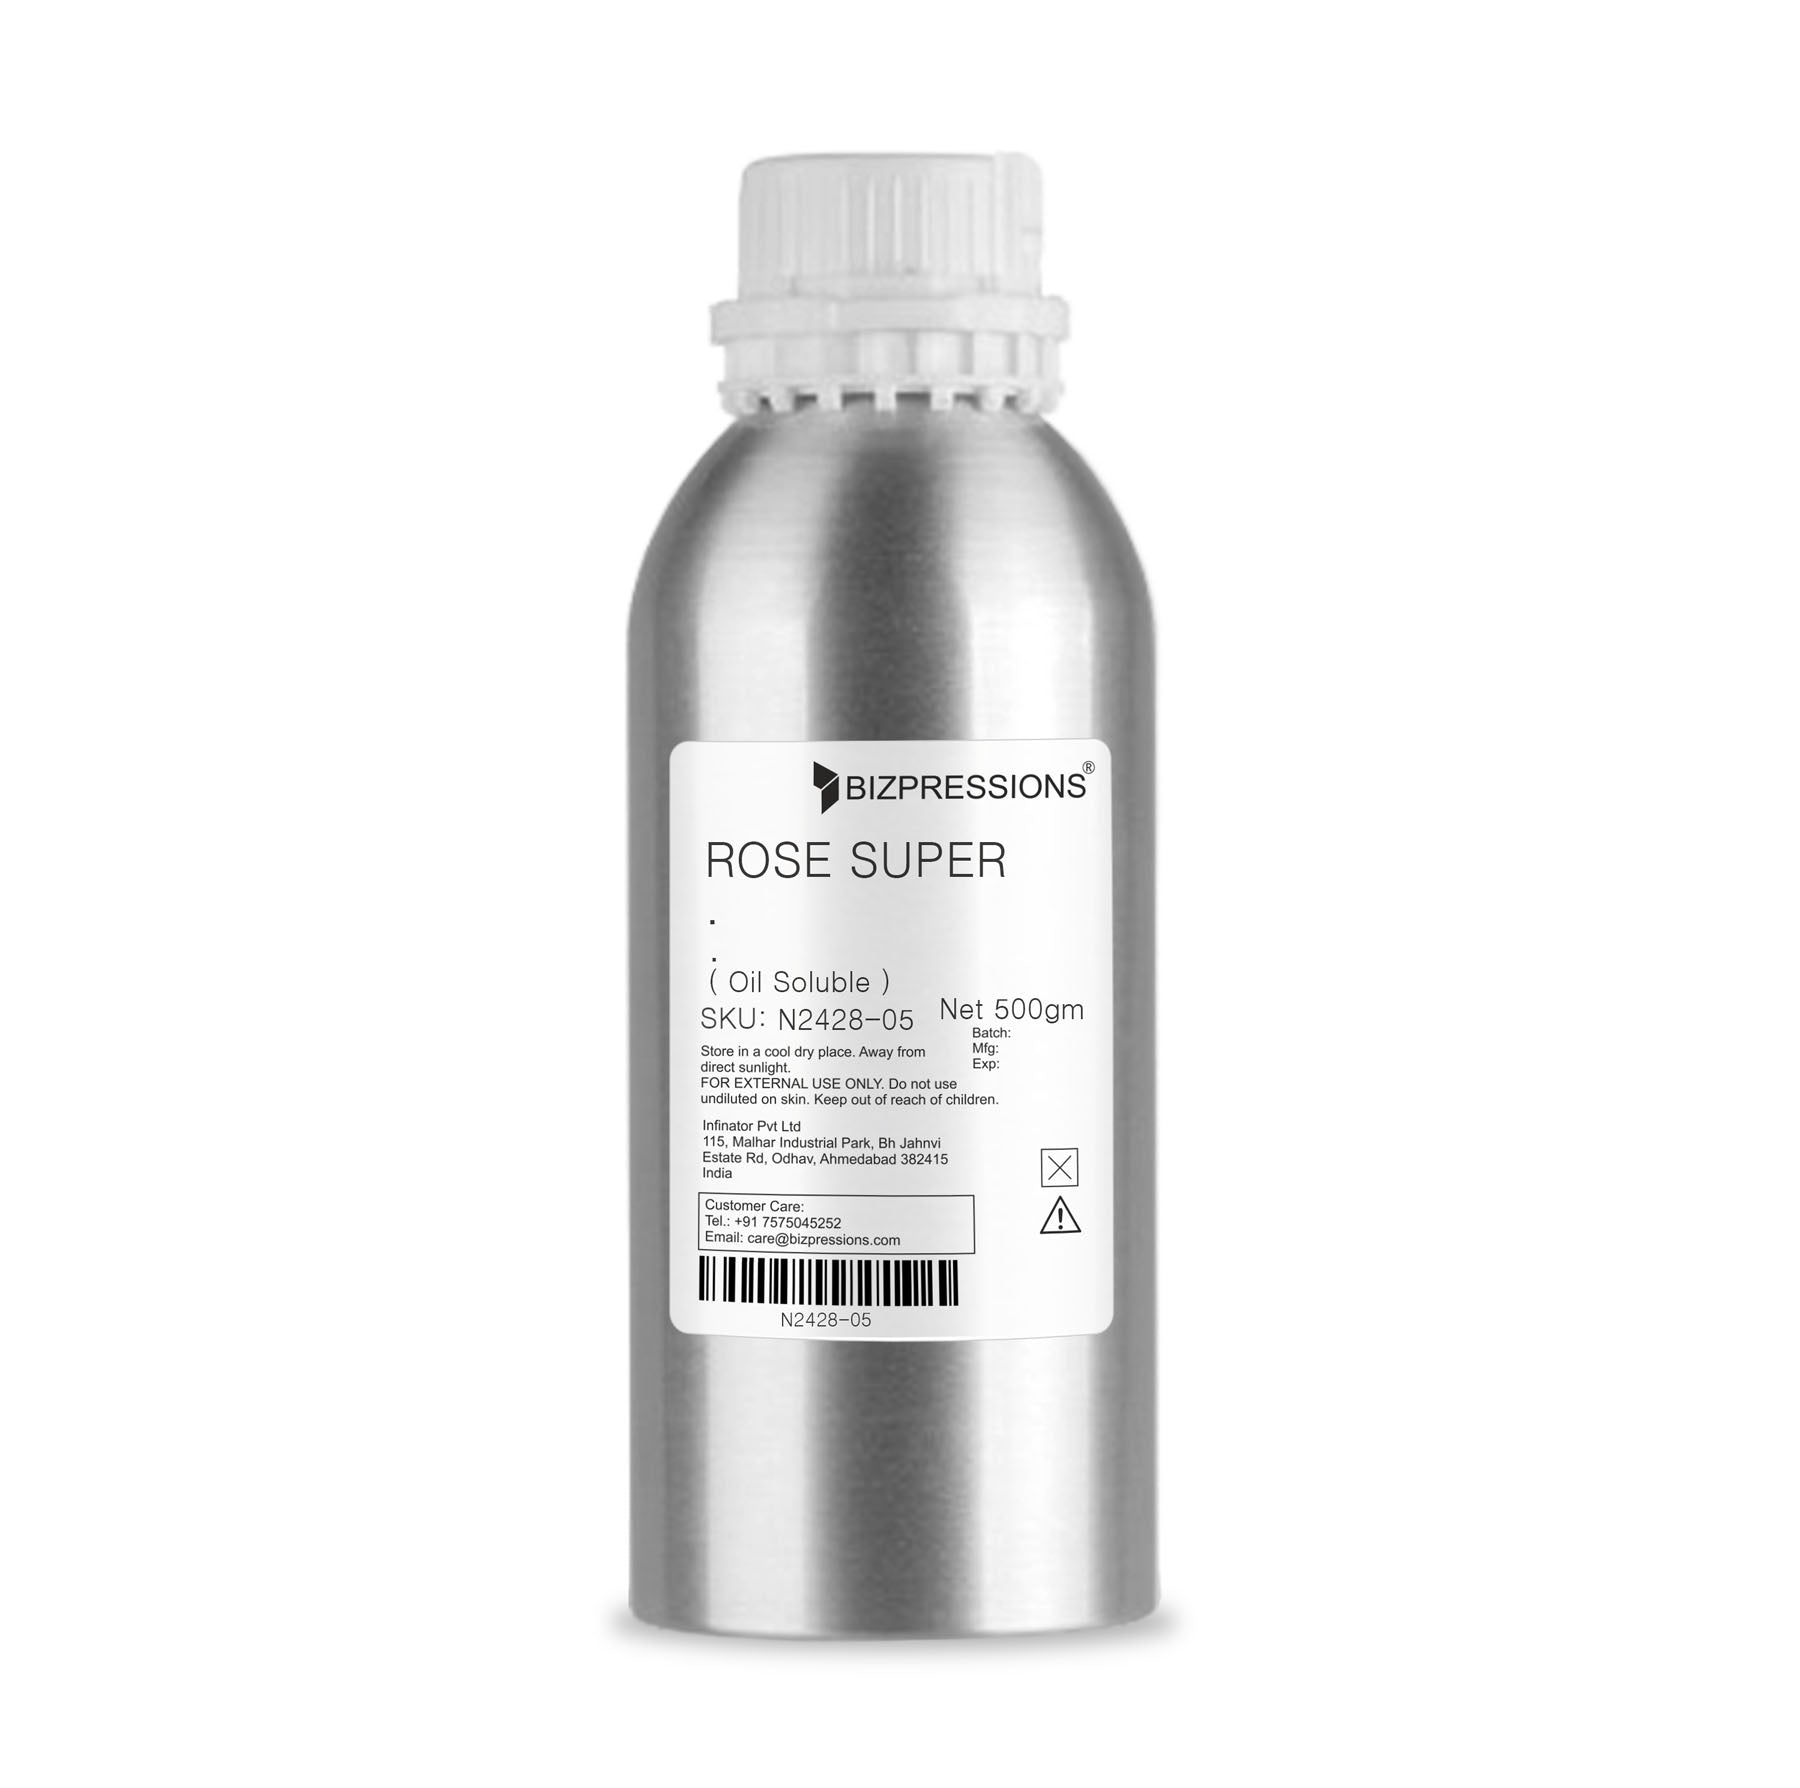 ROSE SUPER - Fragrance ( Oil Soluble ) - 500 gm